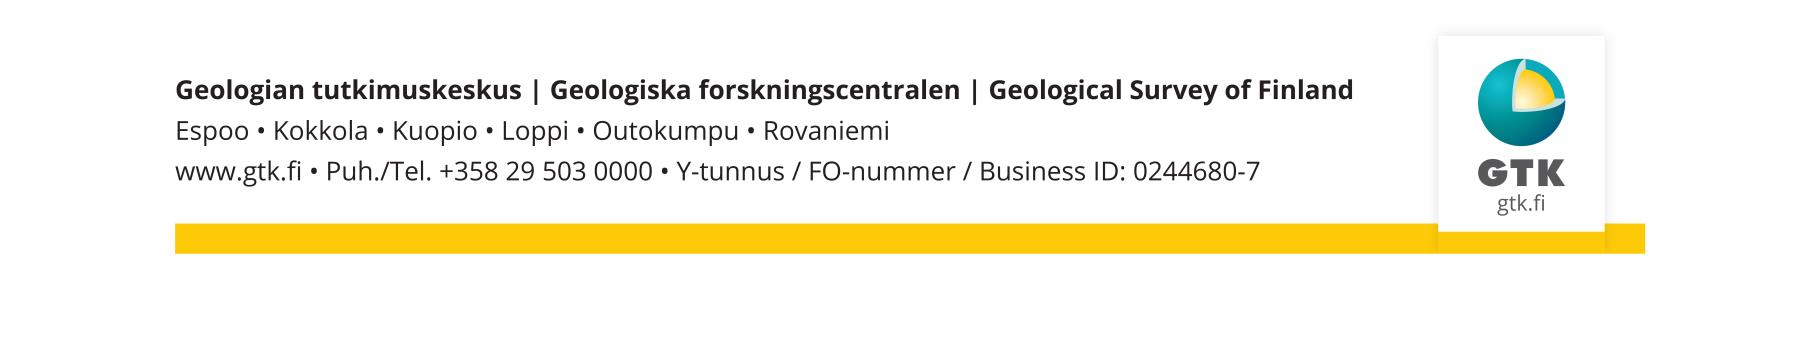 GEOLOGIAN TUTKIMUSKESKUS 1 (8) GEOLOGISKA FORSKNINGSCENTRALEN GEOLOGICAL SURVEY OF FINLAND Lisenssi 2 (avoin lisenssi versio 1.1) 28.09.2016 GTK/973/02.